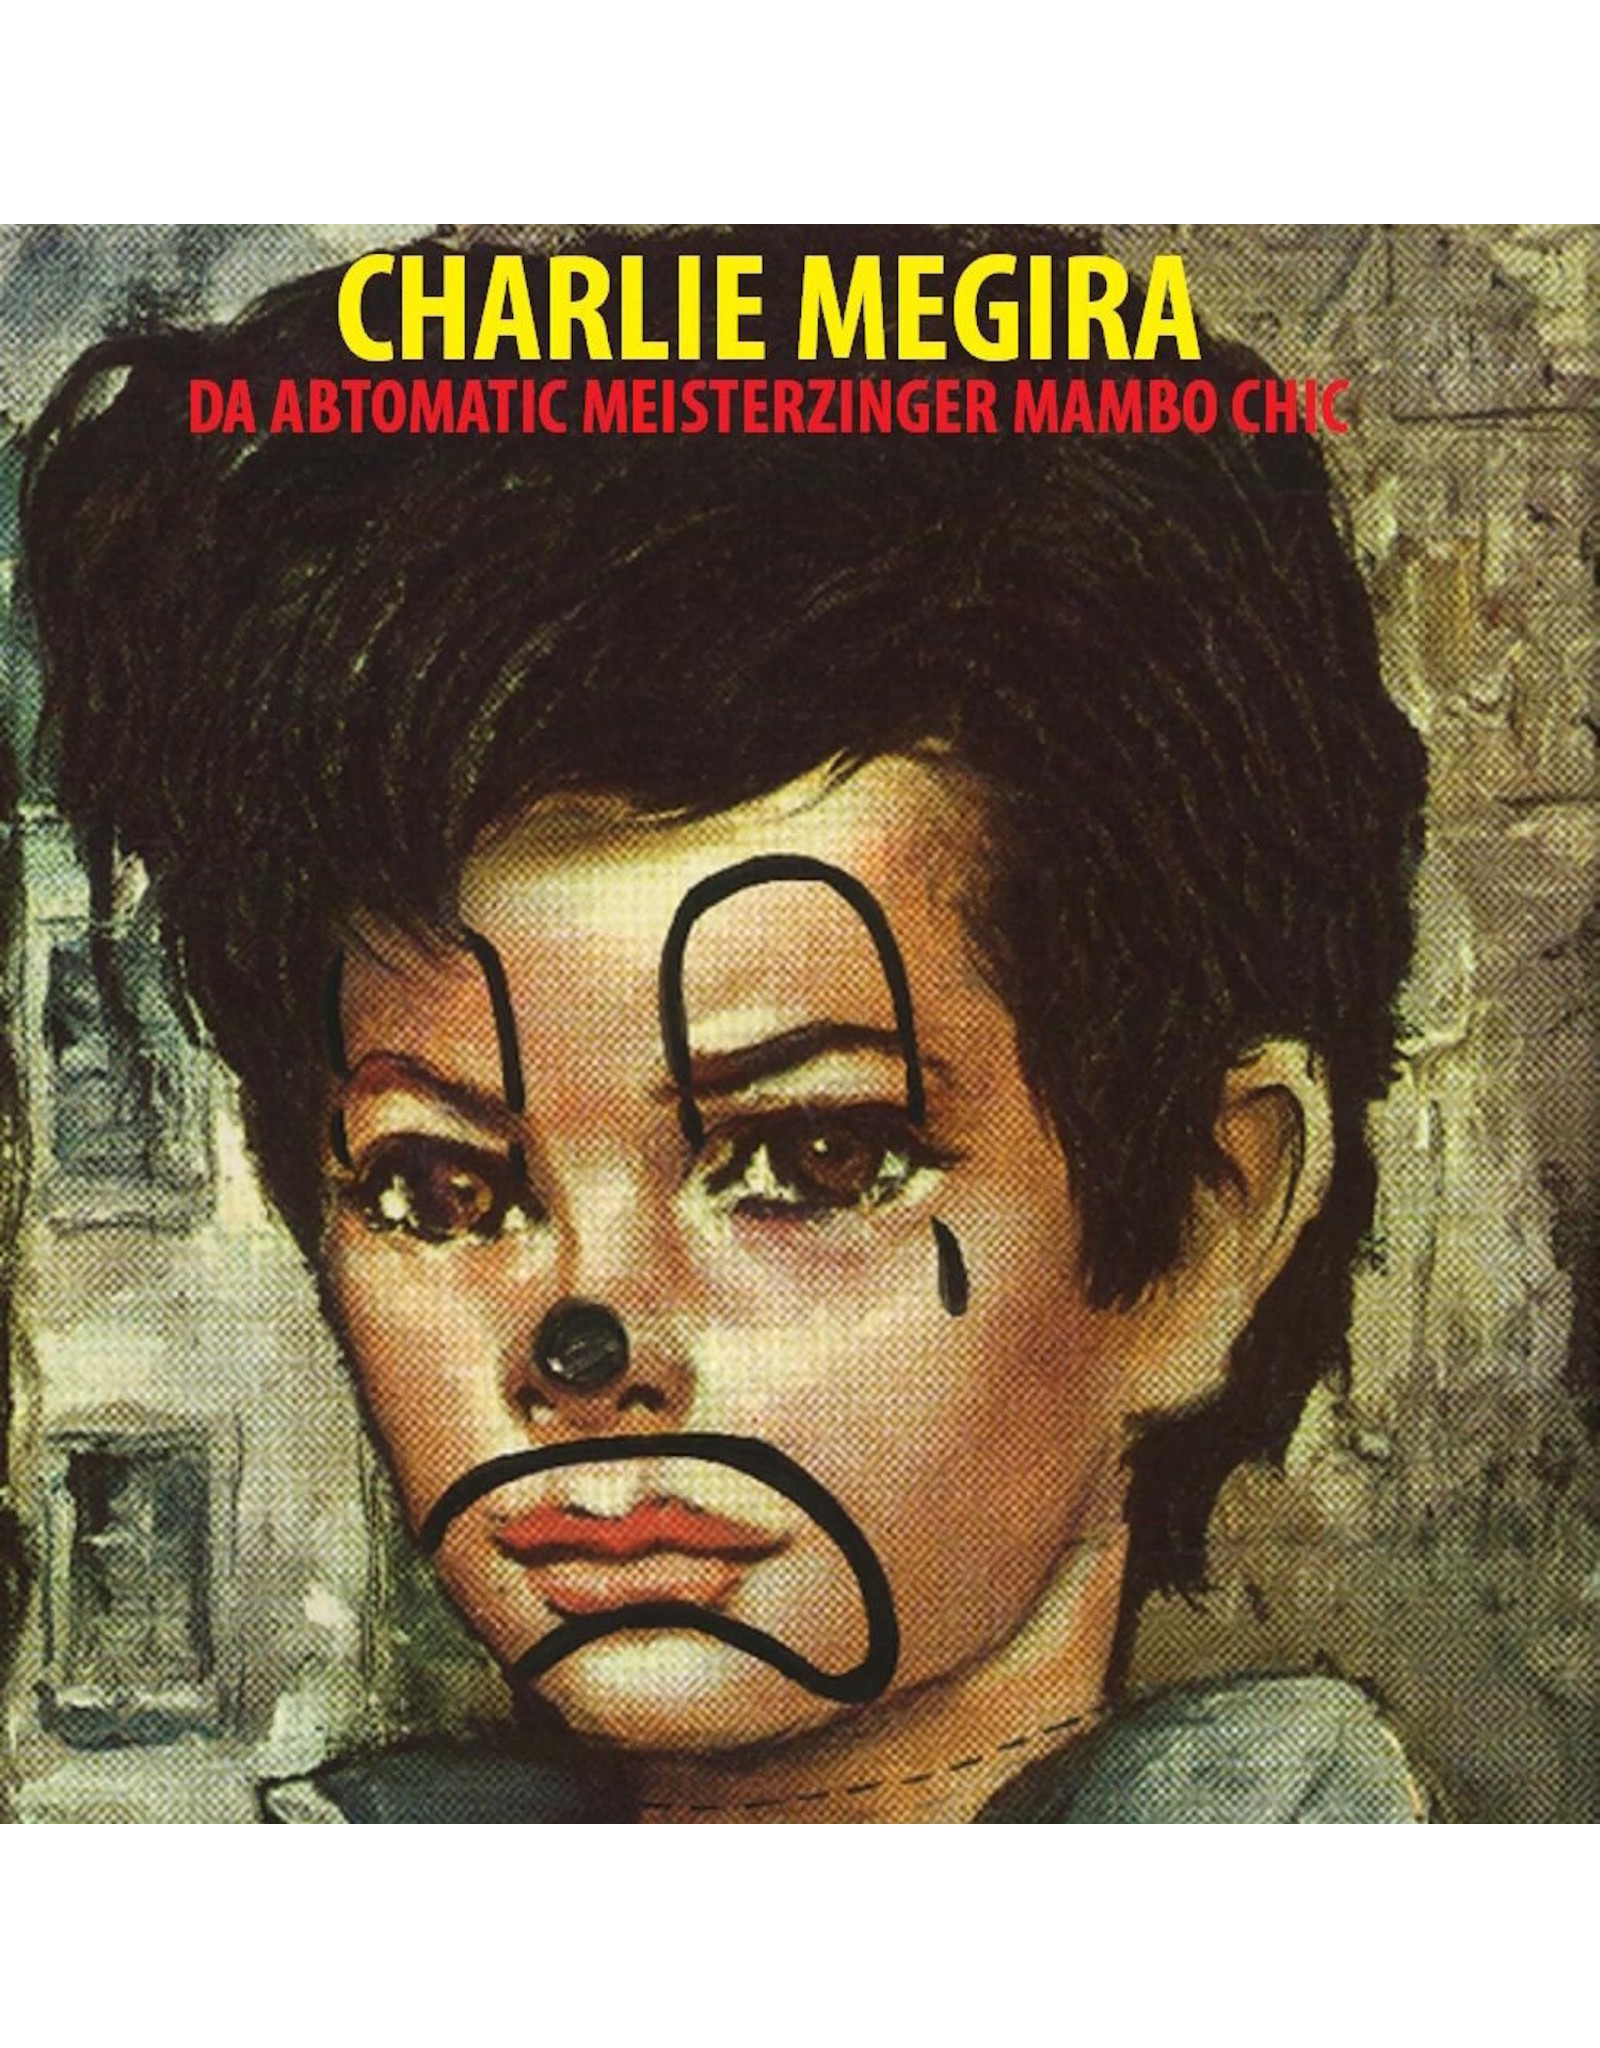 New Vinyl Charlie Megira - Da Abtomatic Meisterzinger Mambo Chic (Colored) LP